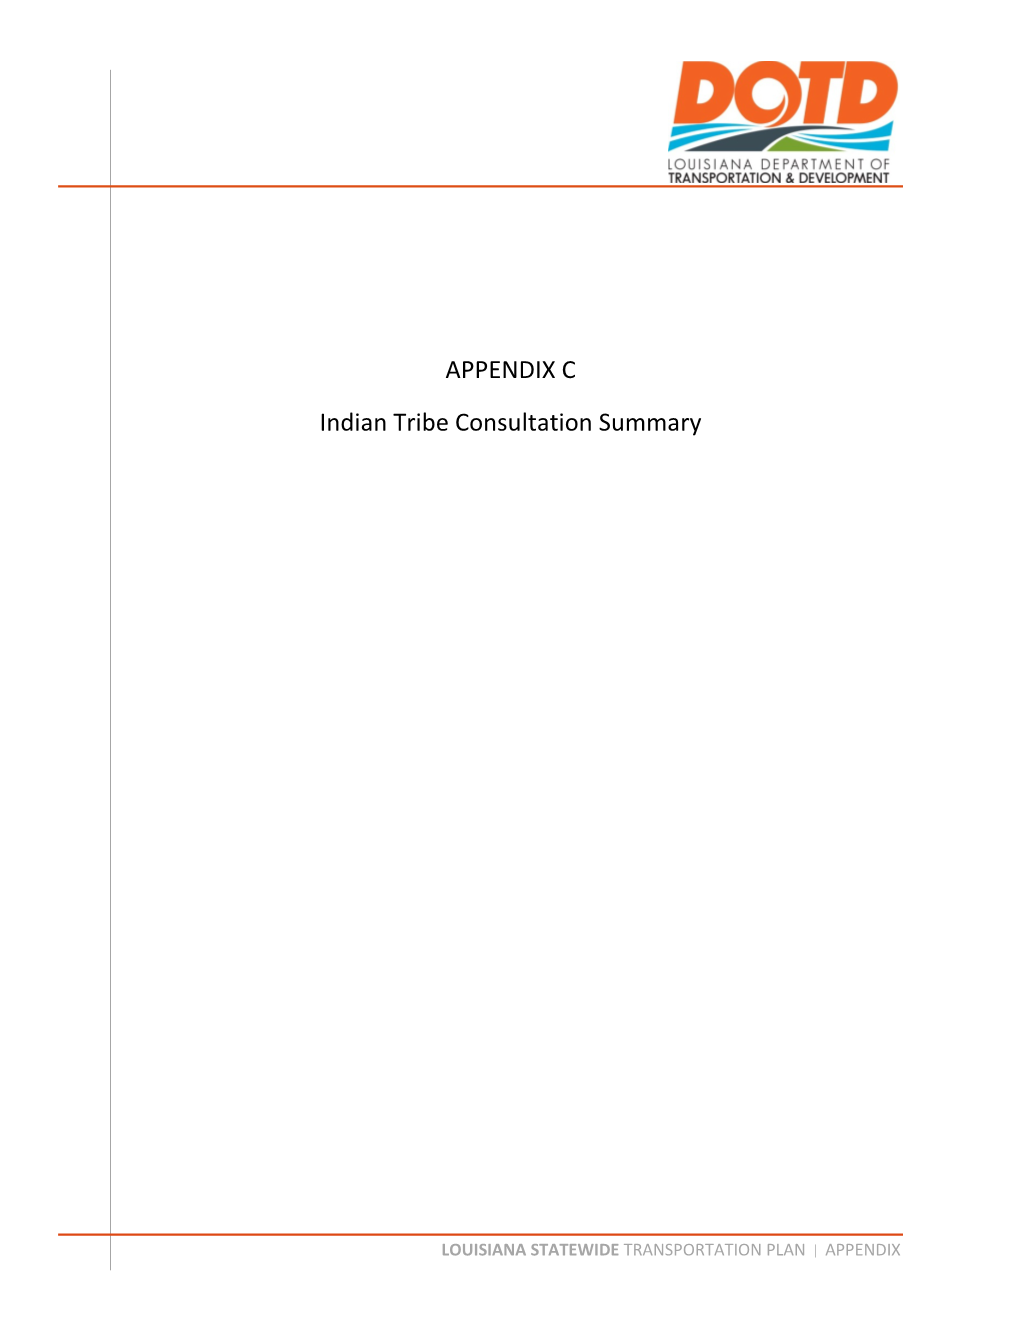 Appendix C Indian Tribe Consultation Summary